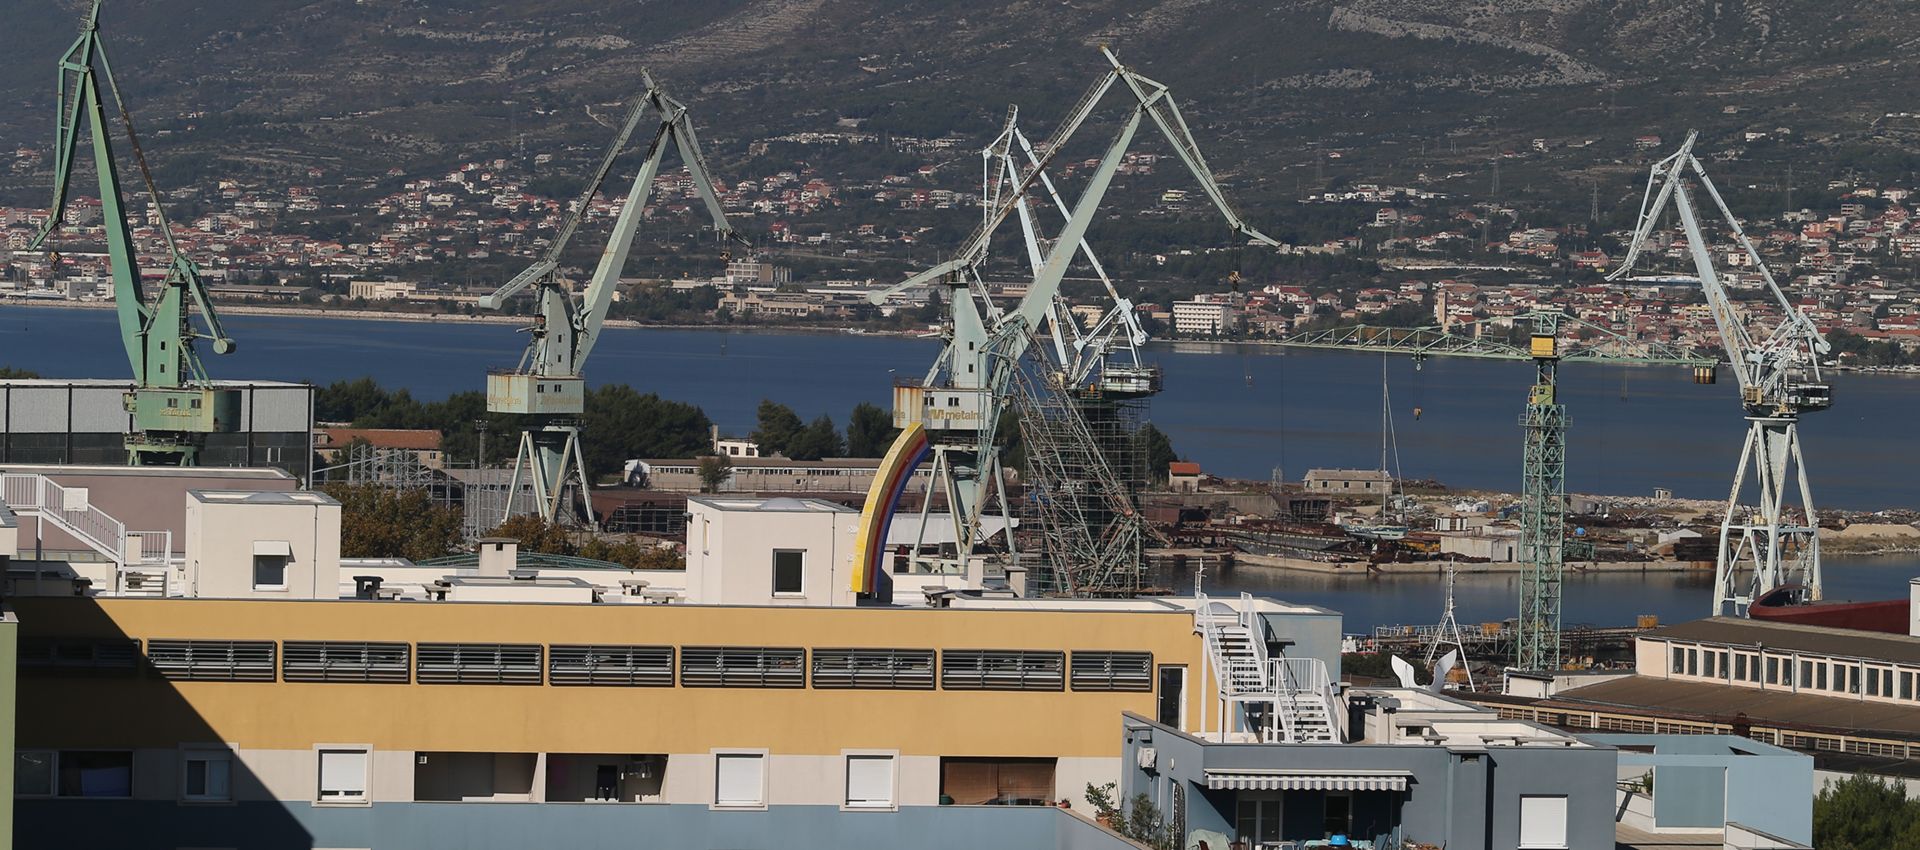 02.11.2015.,Split-panoramski pogled na dizalice u Brodsplitu.
Photo: Ivo Cagalj/PIXSELL